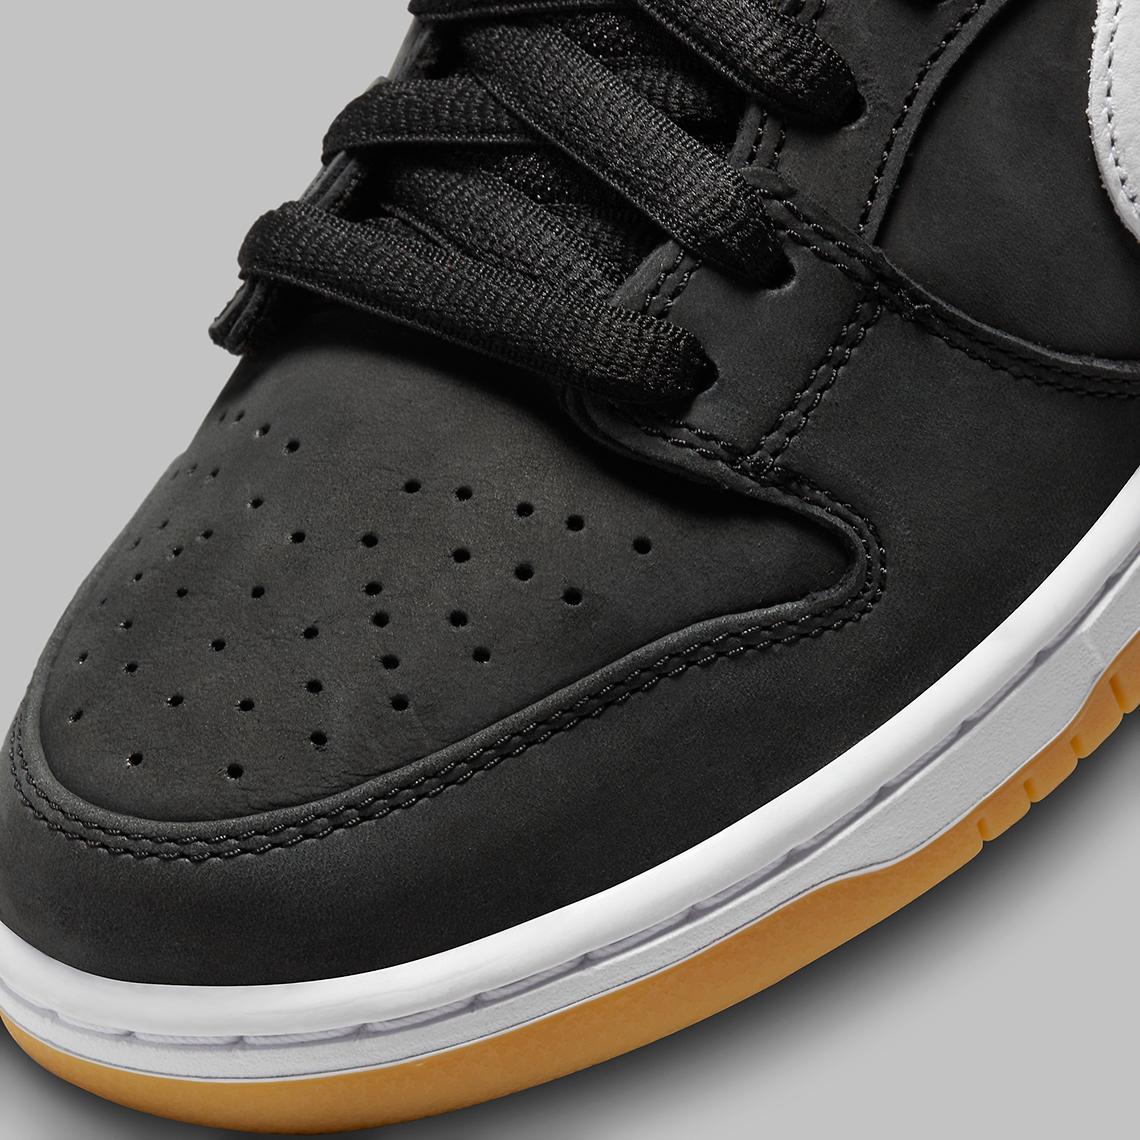 Nike Dunk Low "Black/Gum" CD2563-006 | SneakerNews.com